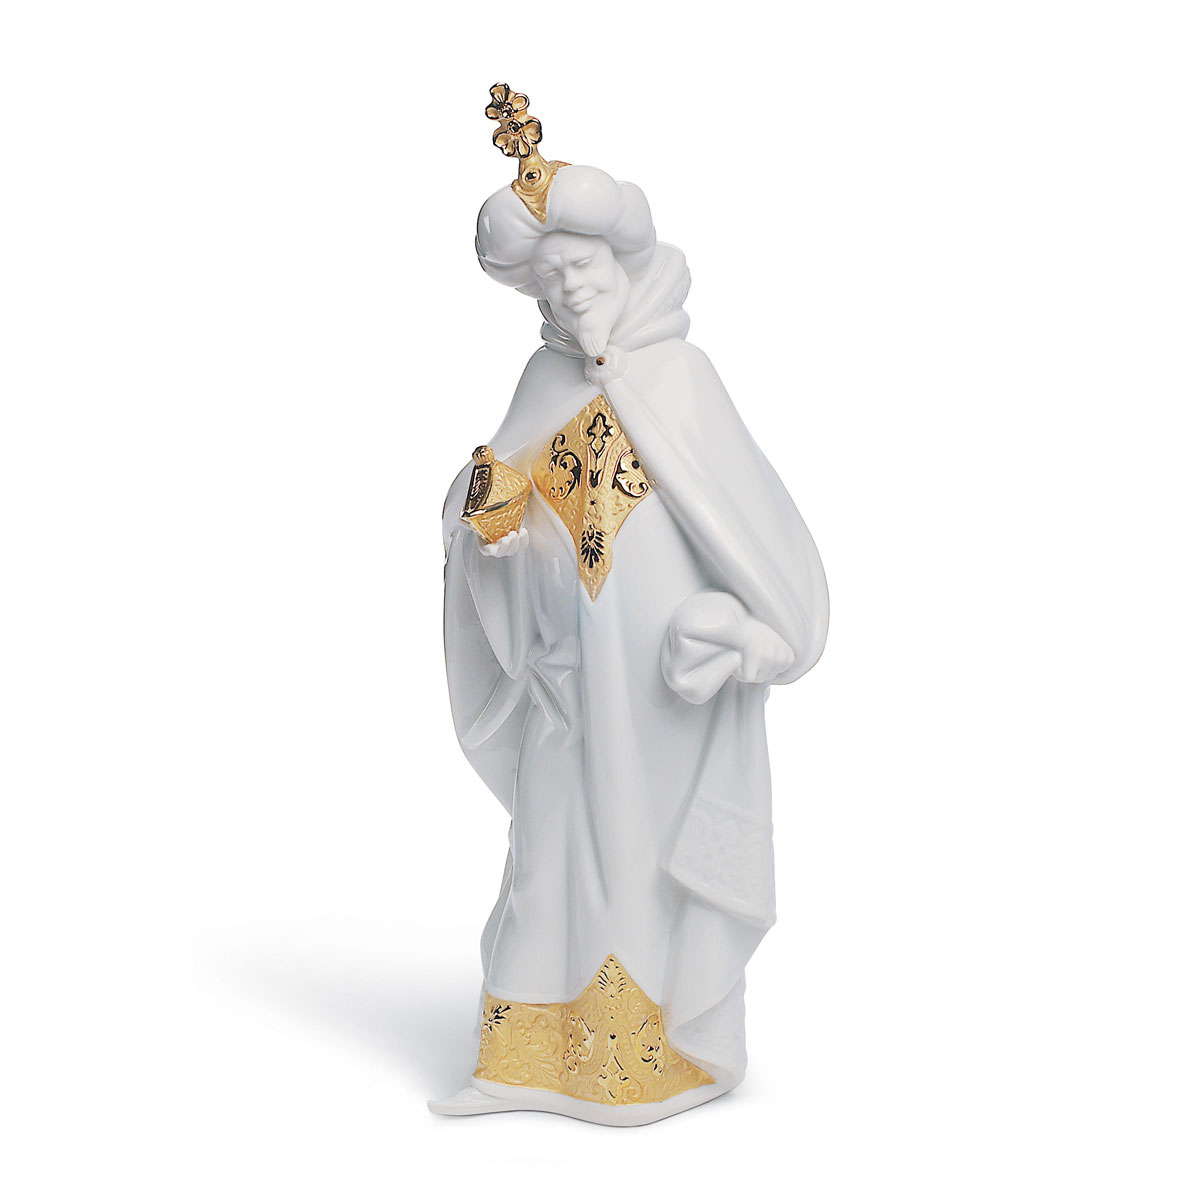 Lladro Classic Sculpture, King Balthasar Nativity Figurine. Golden Lustre